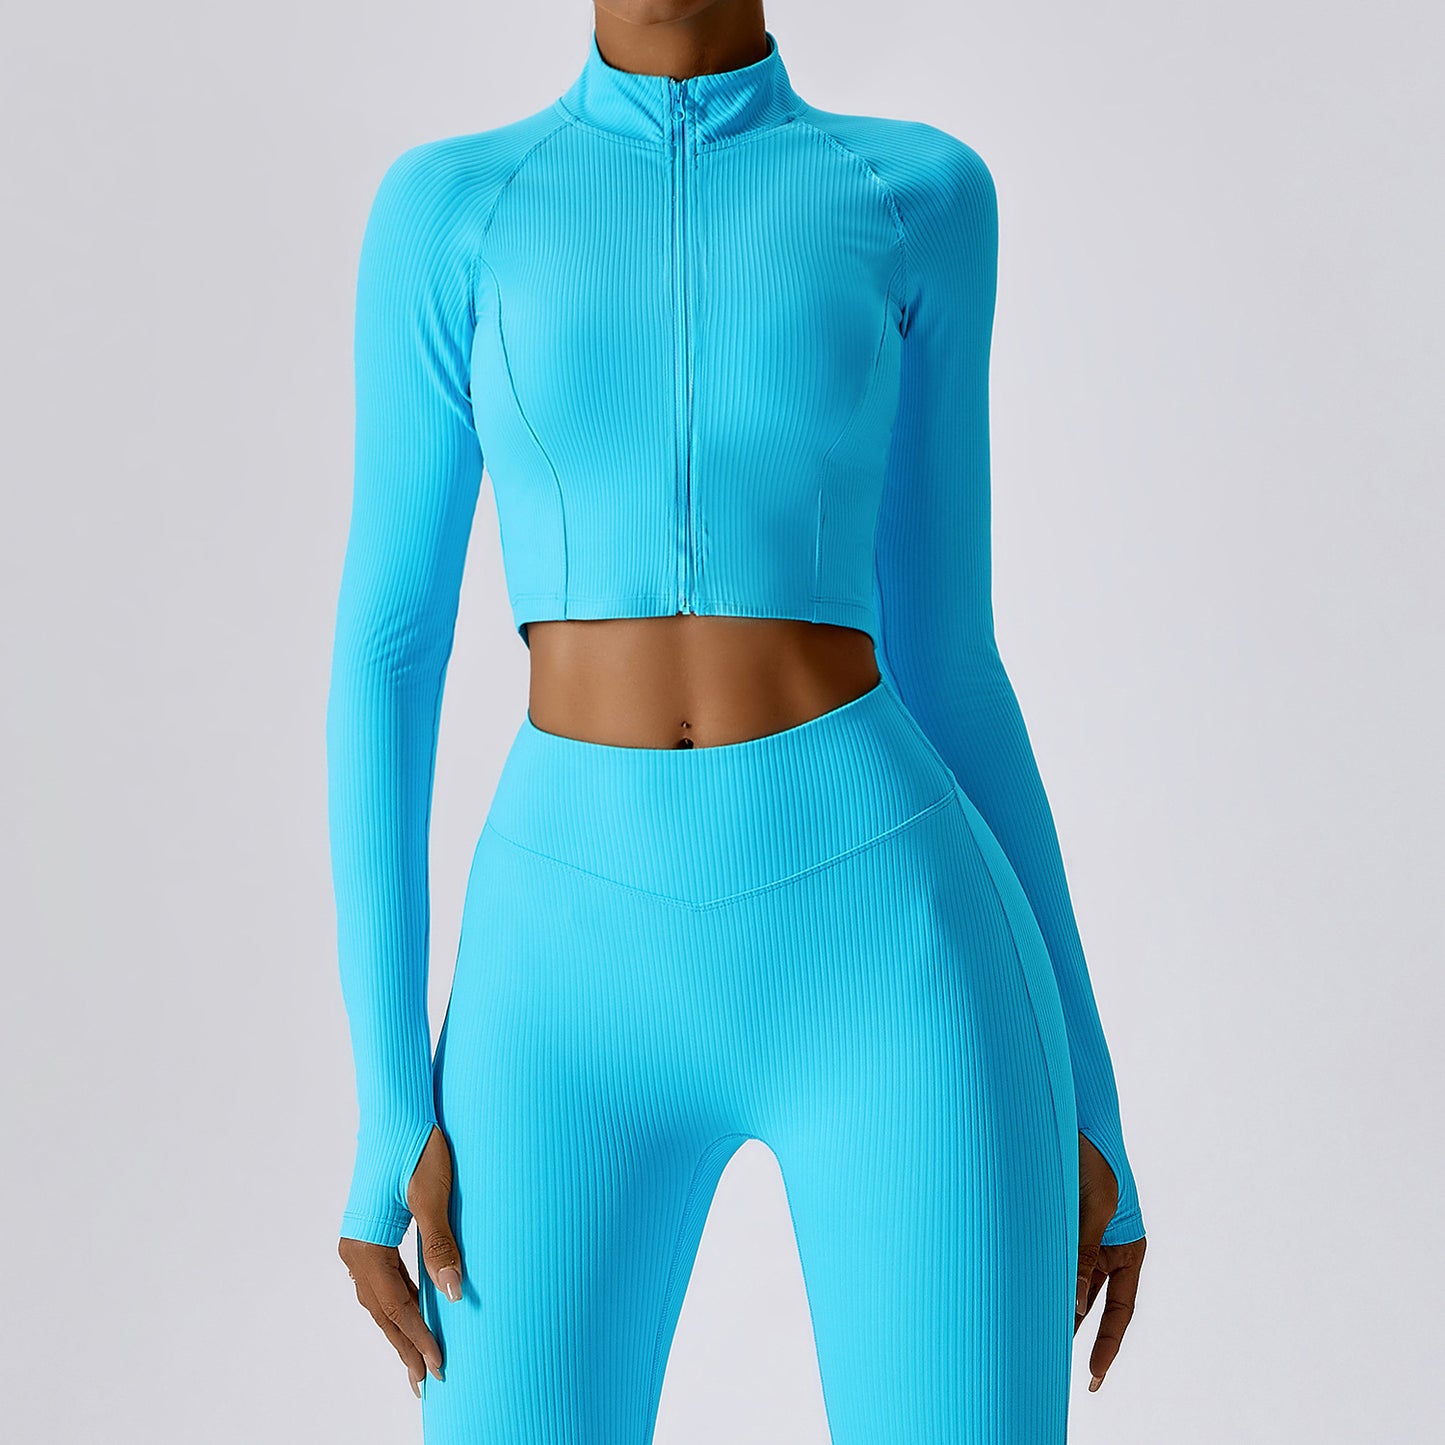 Long Sleeved Yoga Coat Thread Zipper Workout Clothes Top Women Running Exercise Coat